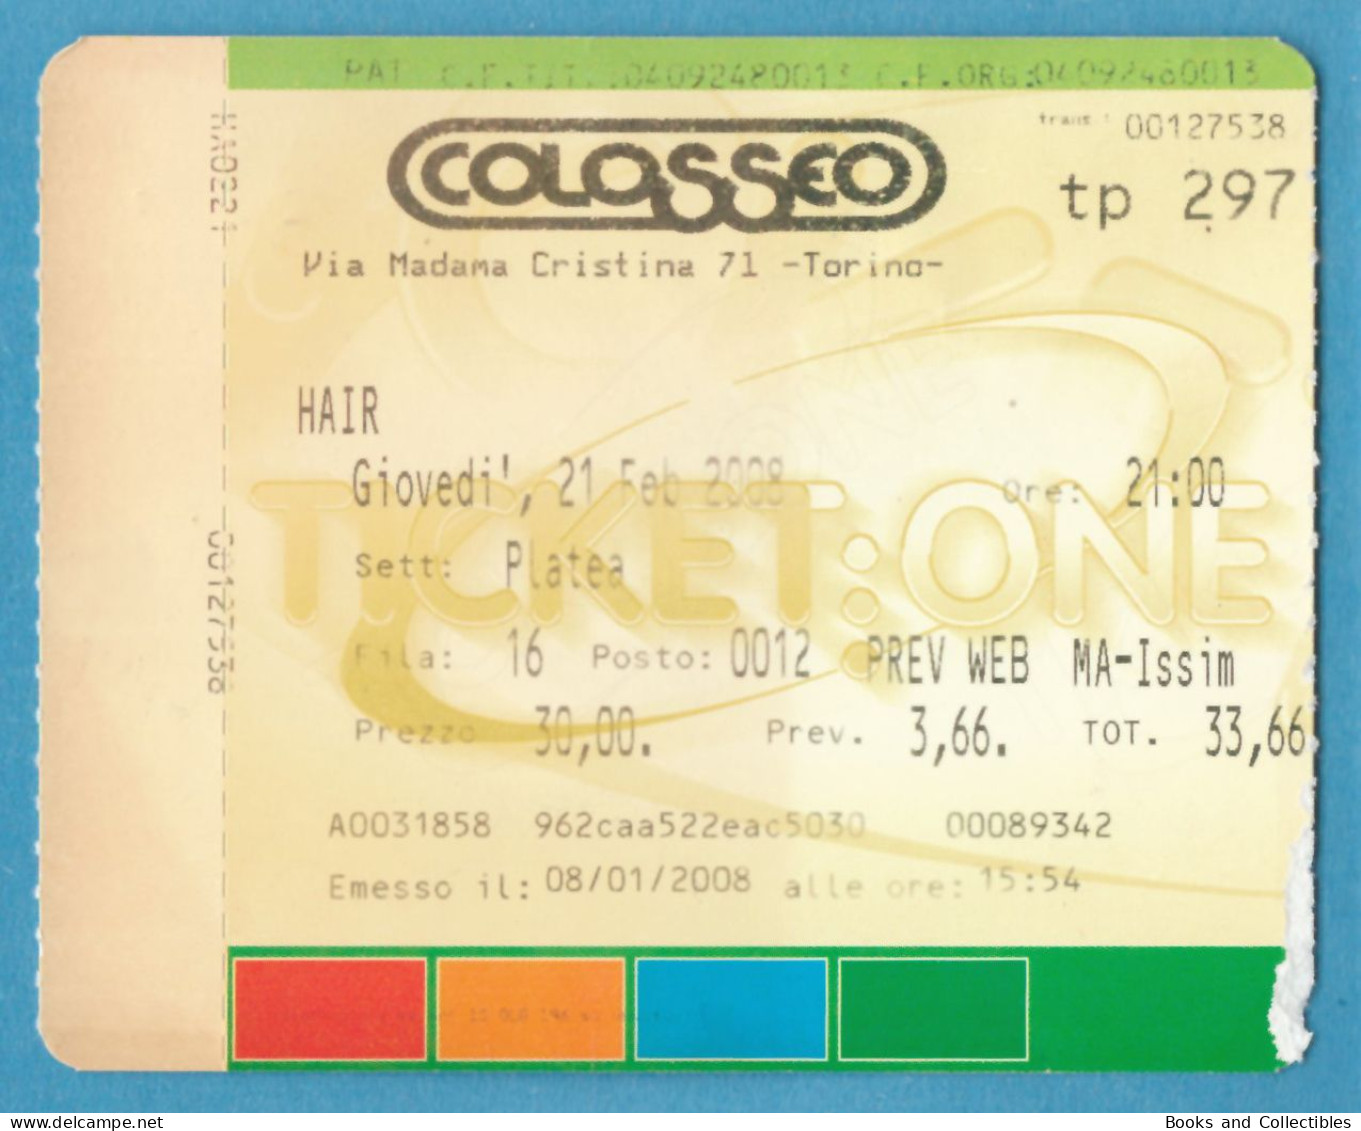 Q-4500 * HAIR - Colosseo, Torino (Italy) - 21 Febbraio 2008 - Concert Tickets